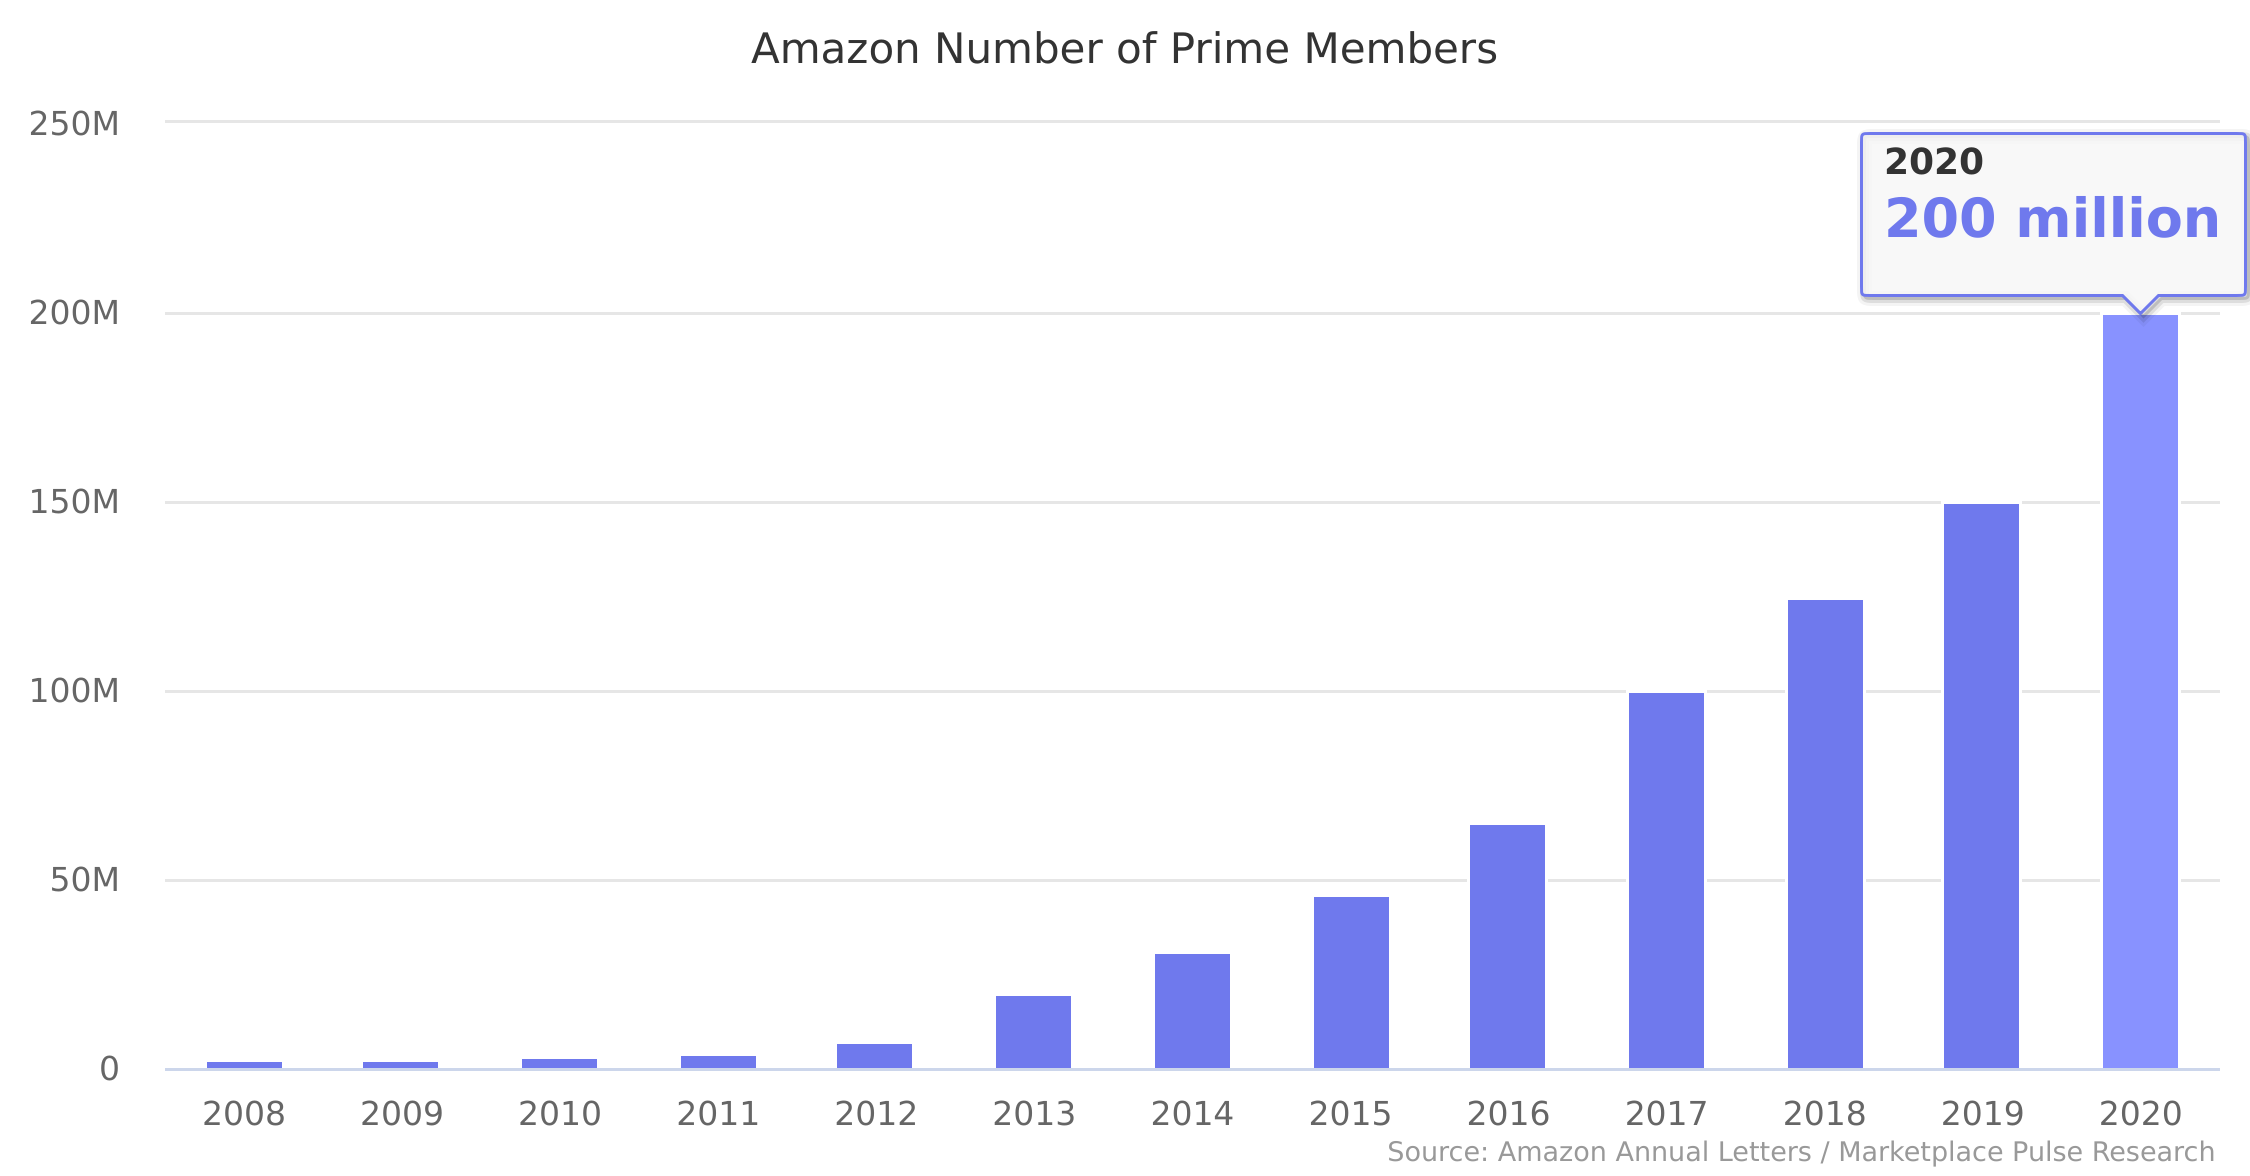 Amazon Number of Prime Members 2008-2020